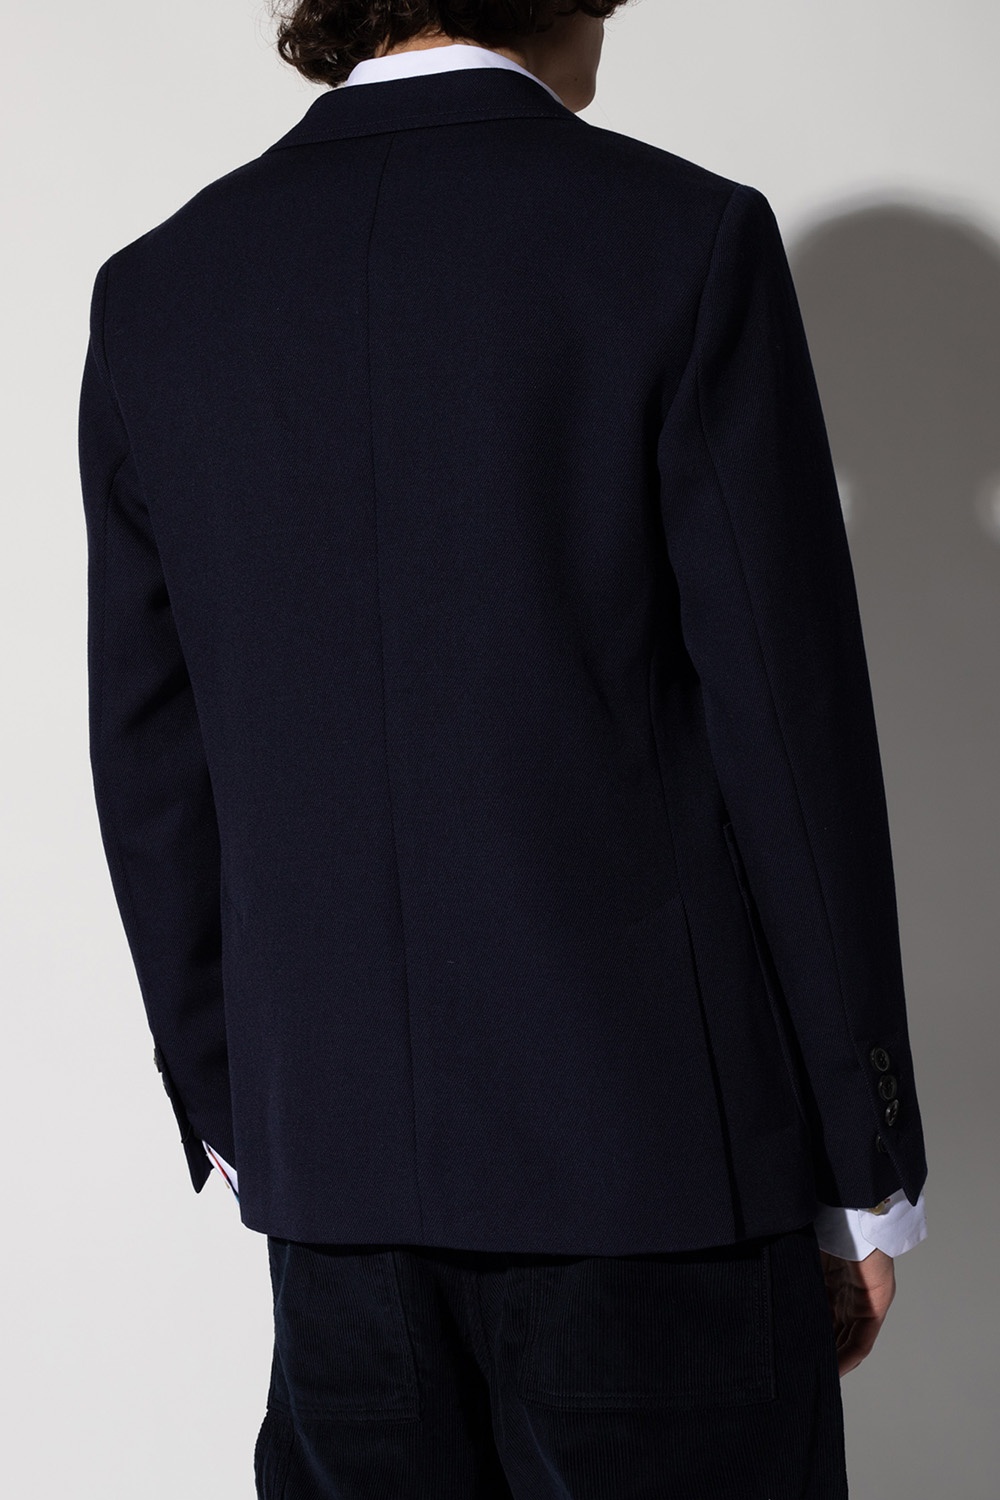 Givenchy Paris Rottweiler Sweatshirt Blazer with notched lapels